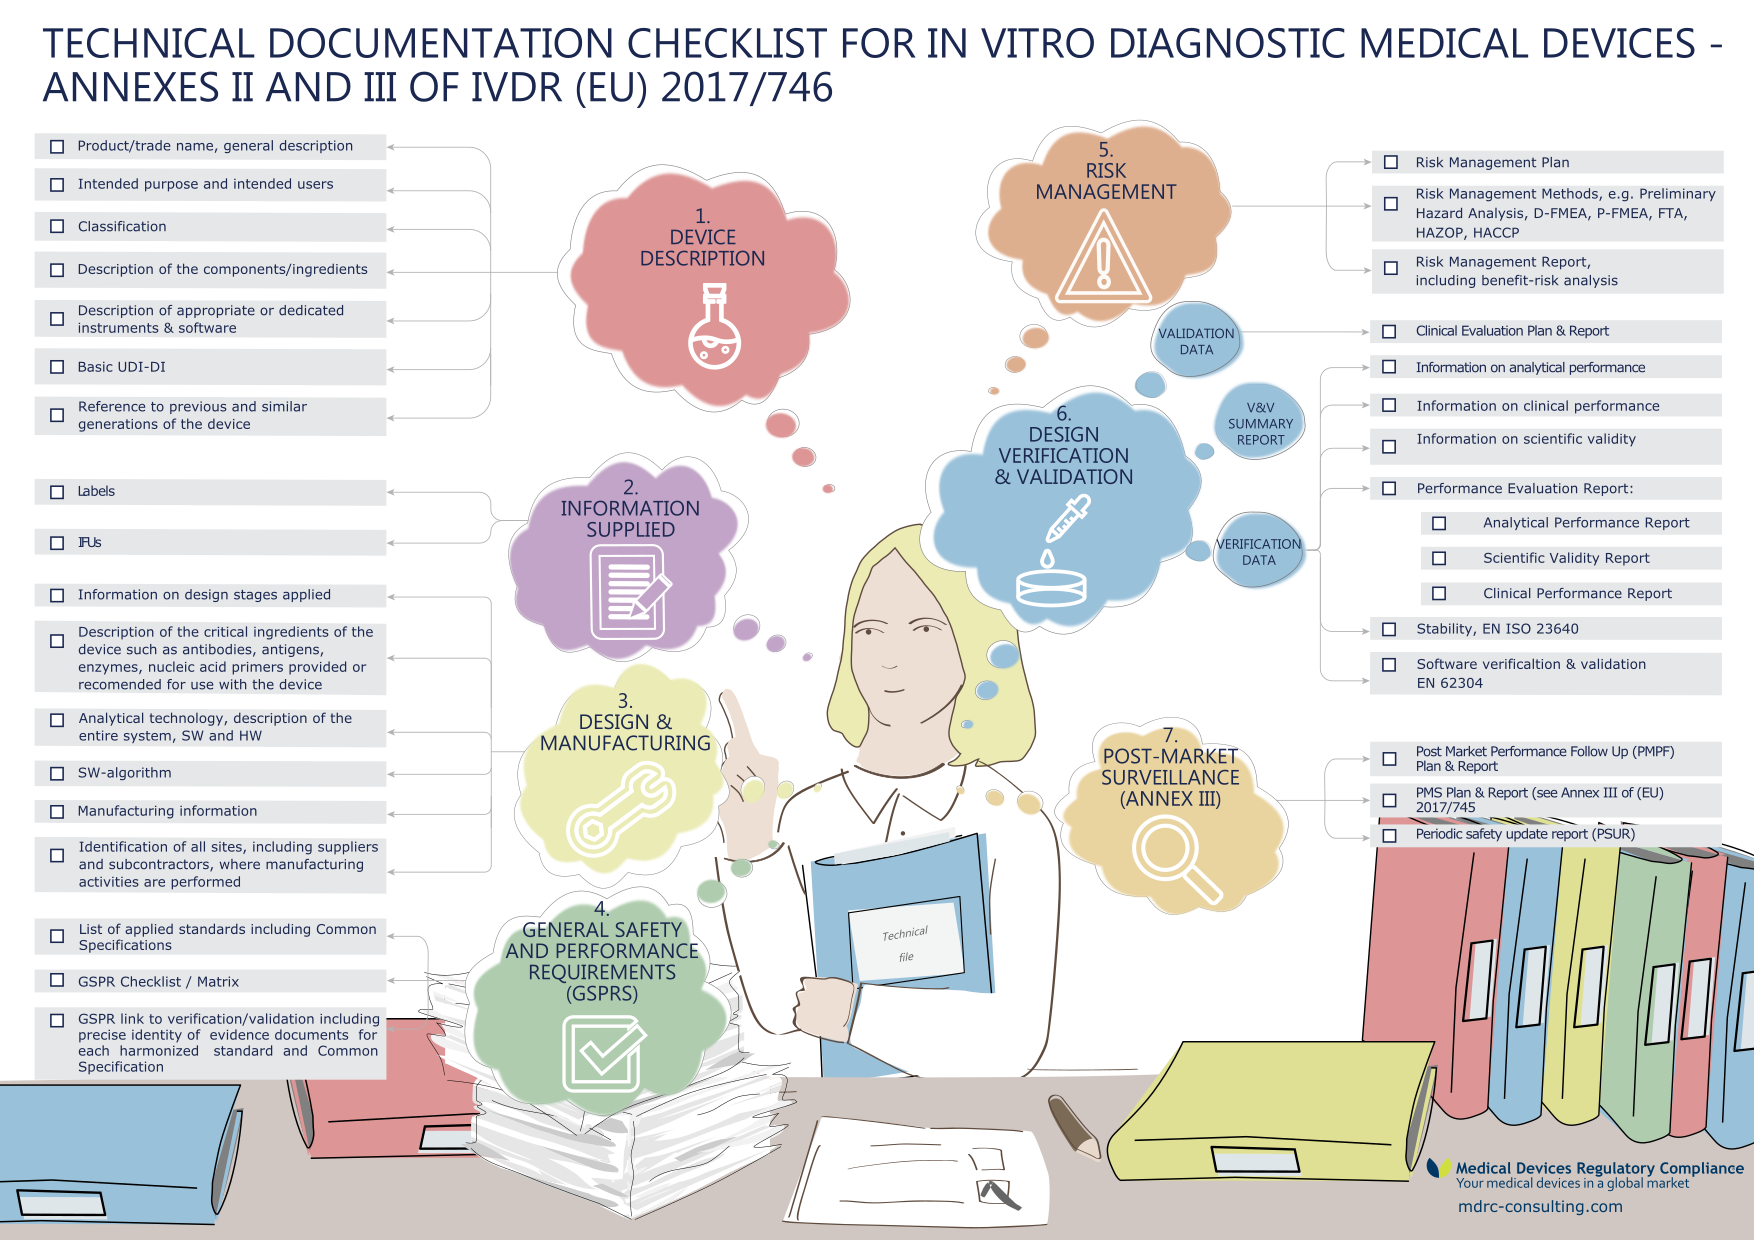 Technical documentation checklist for in vitro diagnostic medical devices according to Annexes II and III of the In Vitro Diagnostic Medical Device Regulation EU 2017/746.